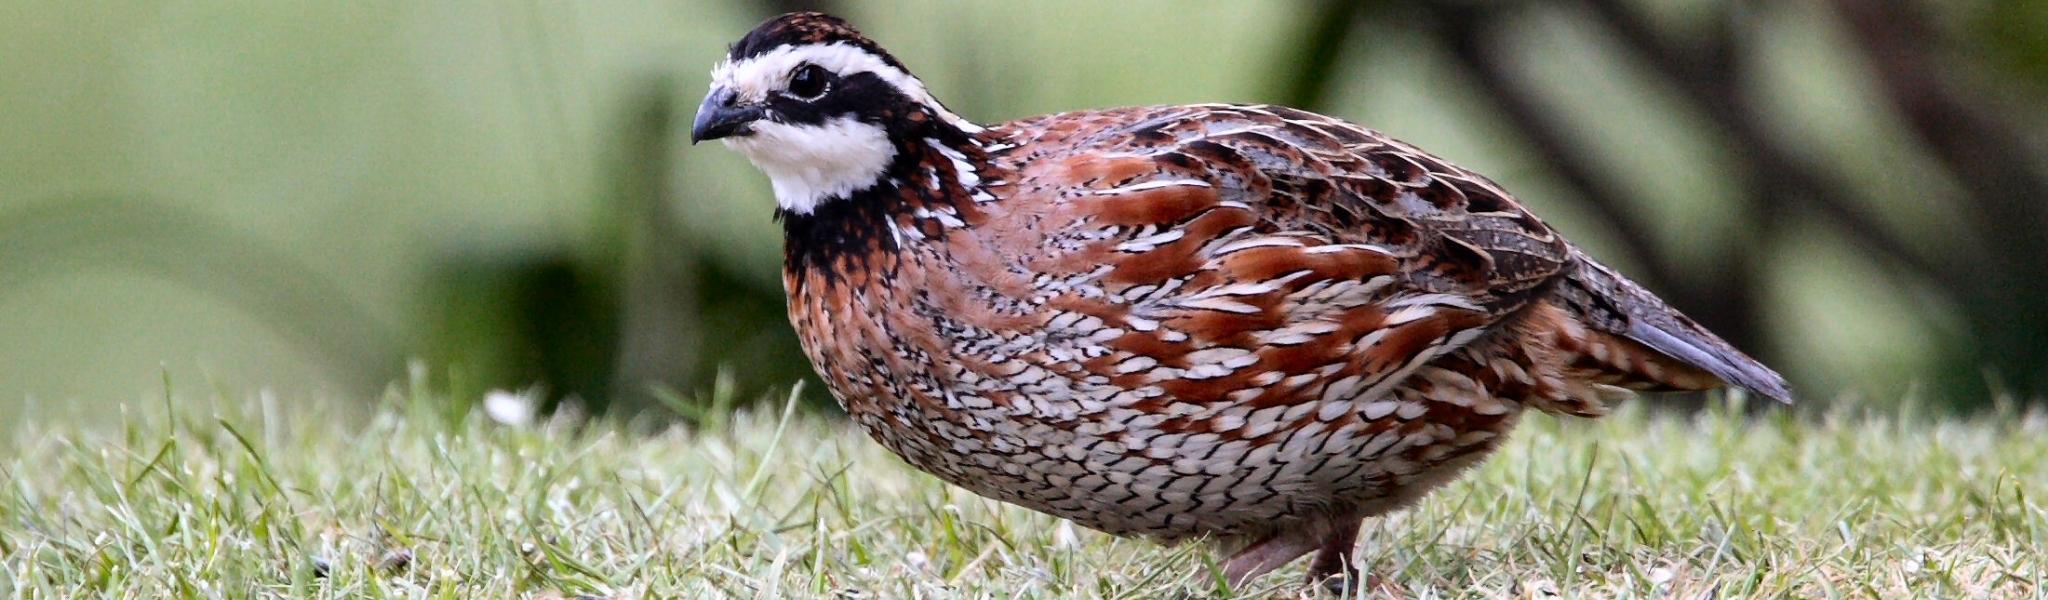 bobwhite quail banner.jpg